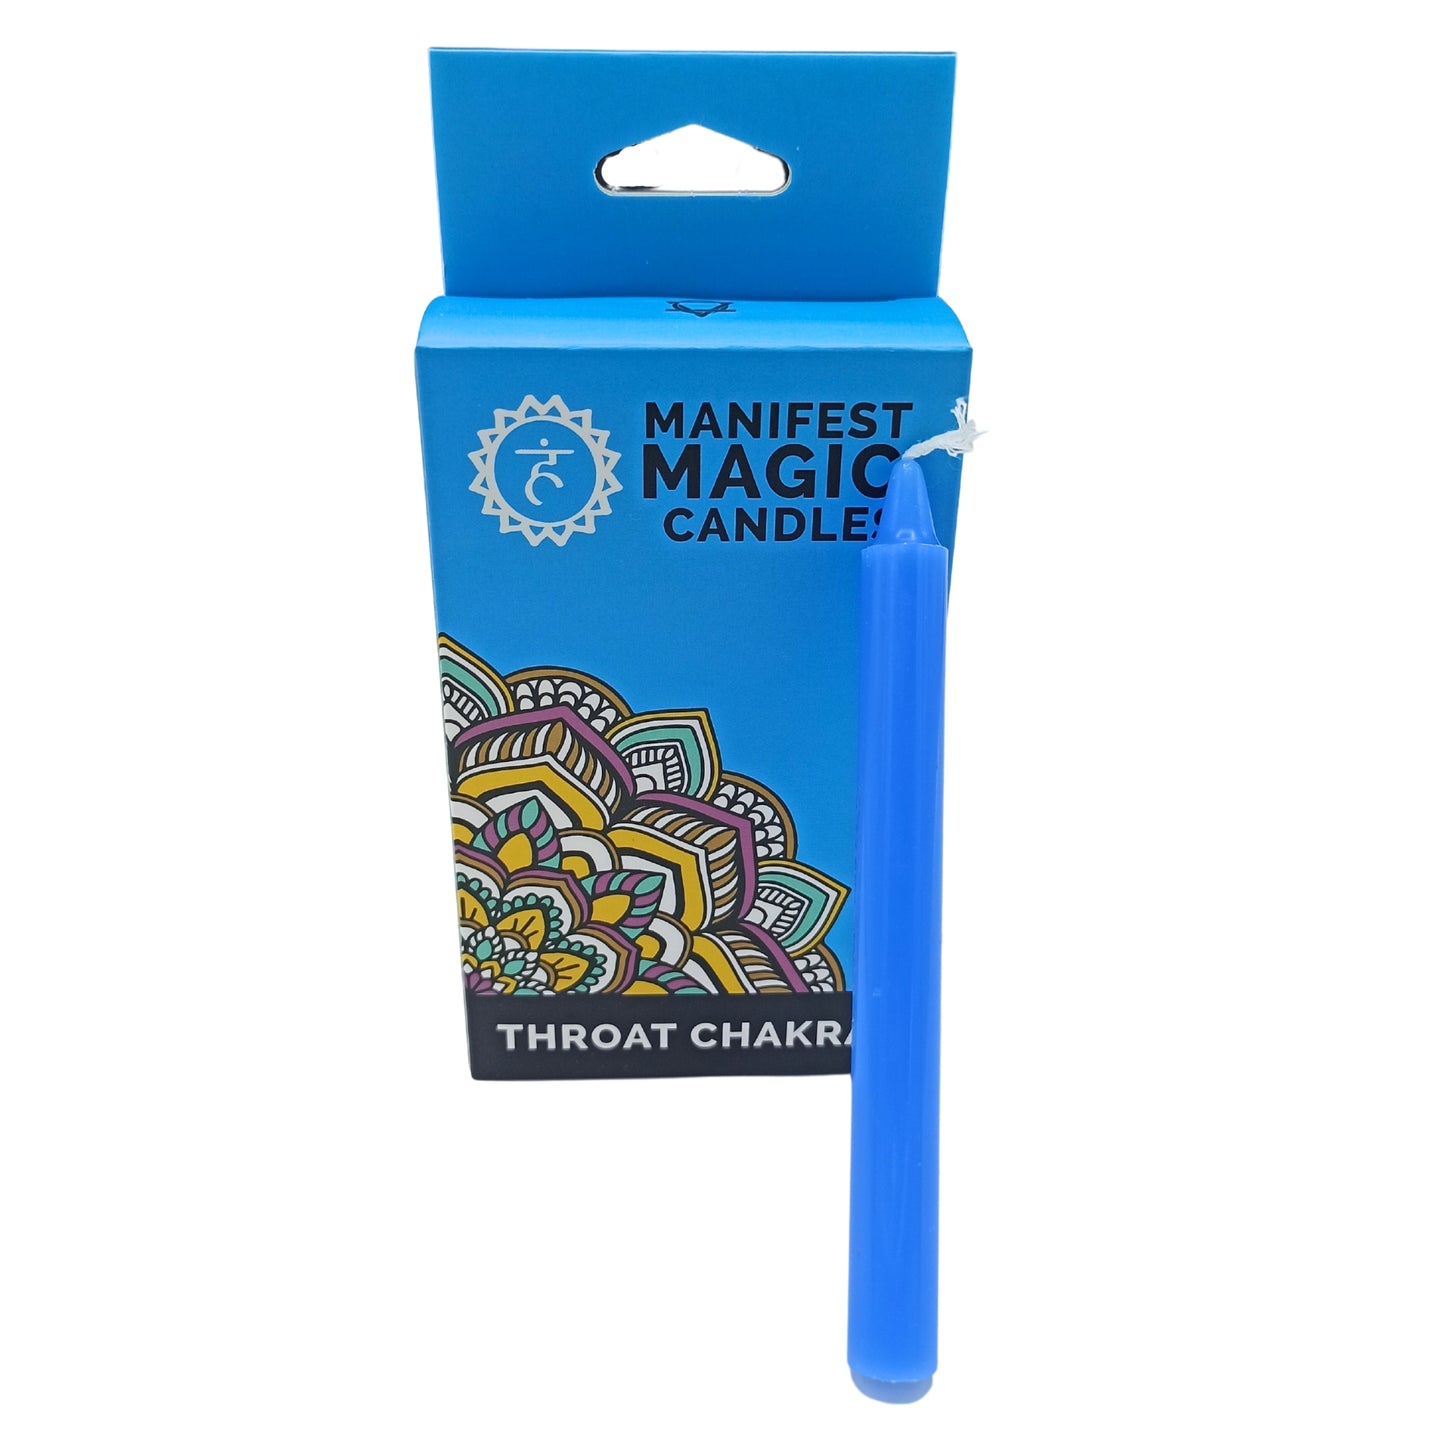 Manifest Magic Candles (pack of 12) - Blue - Throat Chakra - Kaftans direct